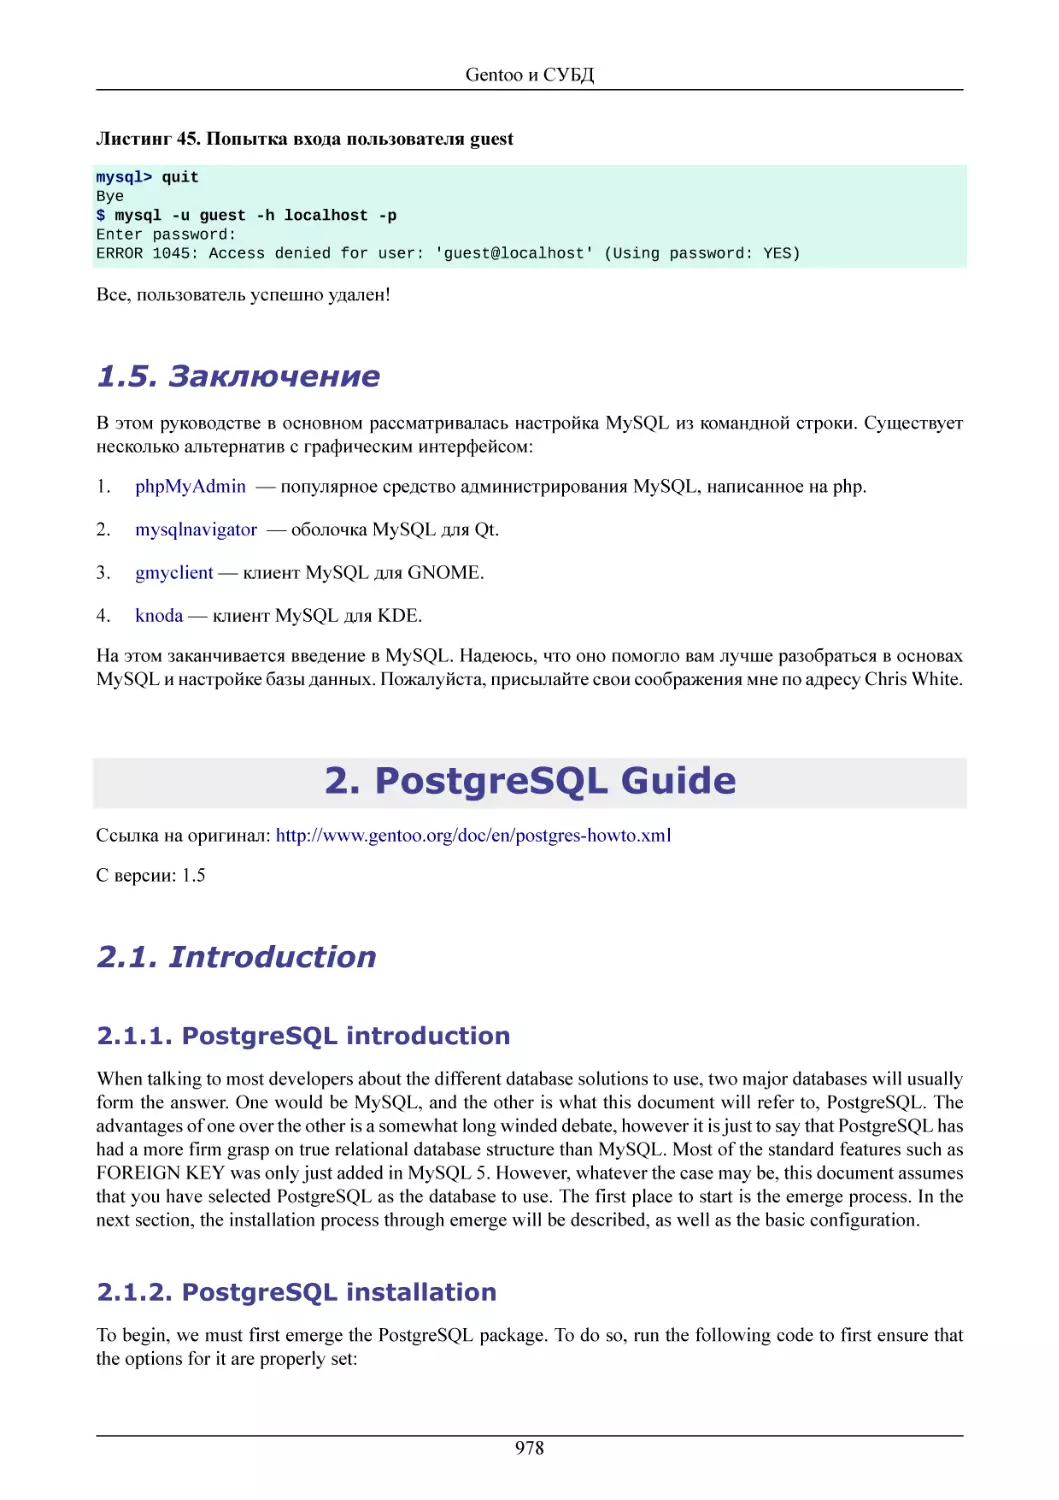 Заключение
PostgreSQL Guide
Introduction
PostgreSQL introduction
PostgreSQL installation